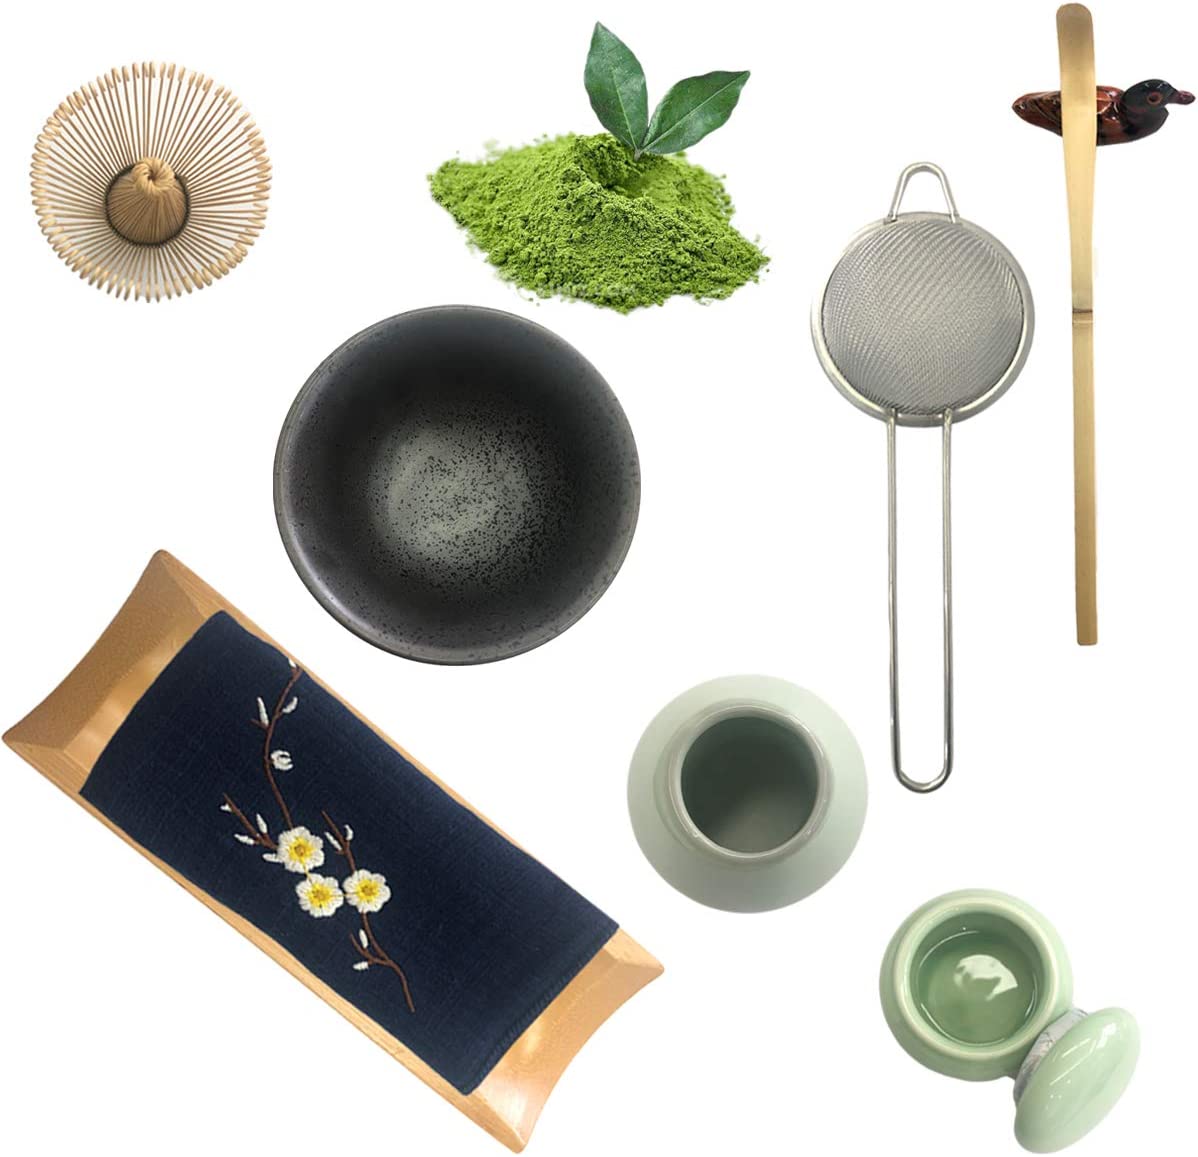 Artcome Japanese Matcha Tea Set, Matcha Whisk, Traditional Scoop, Matcha Bowl, Ceramic Whisk Holder, Matcha Caddy, Handmade Matcha Ceremony Kit For Traditional Japanese Tea Ceremony (9Pcs)